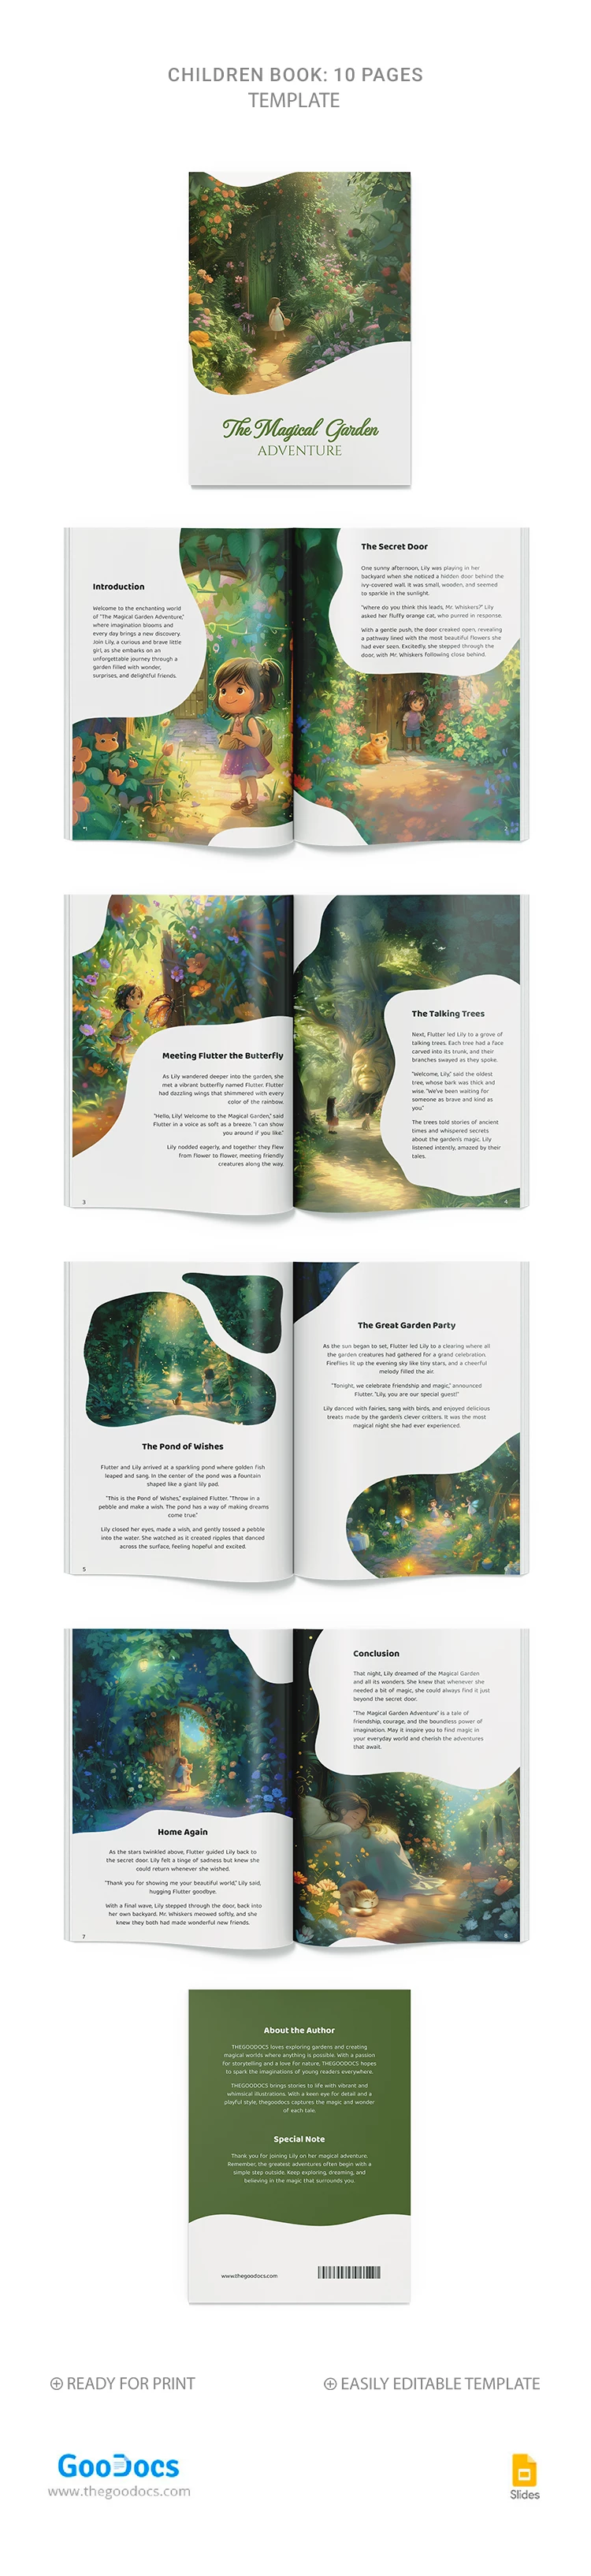 Libro Creativo para Niños - free Google Docs Template - 10068736